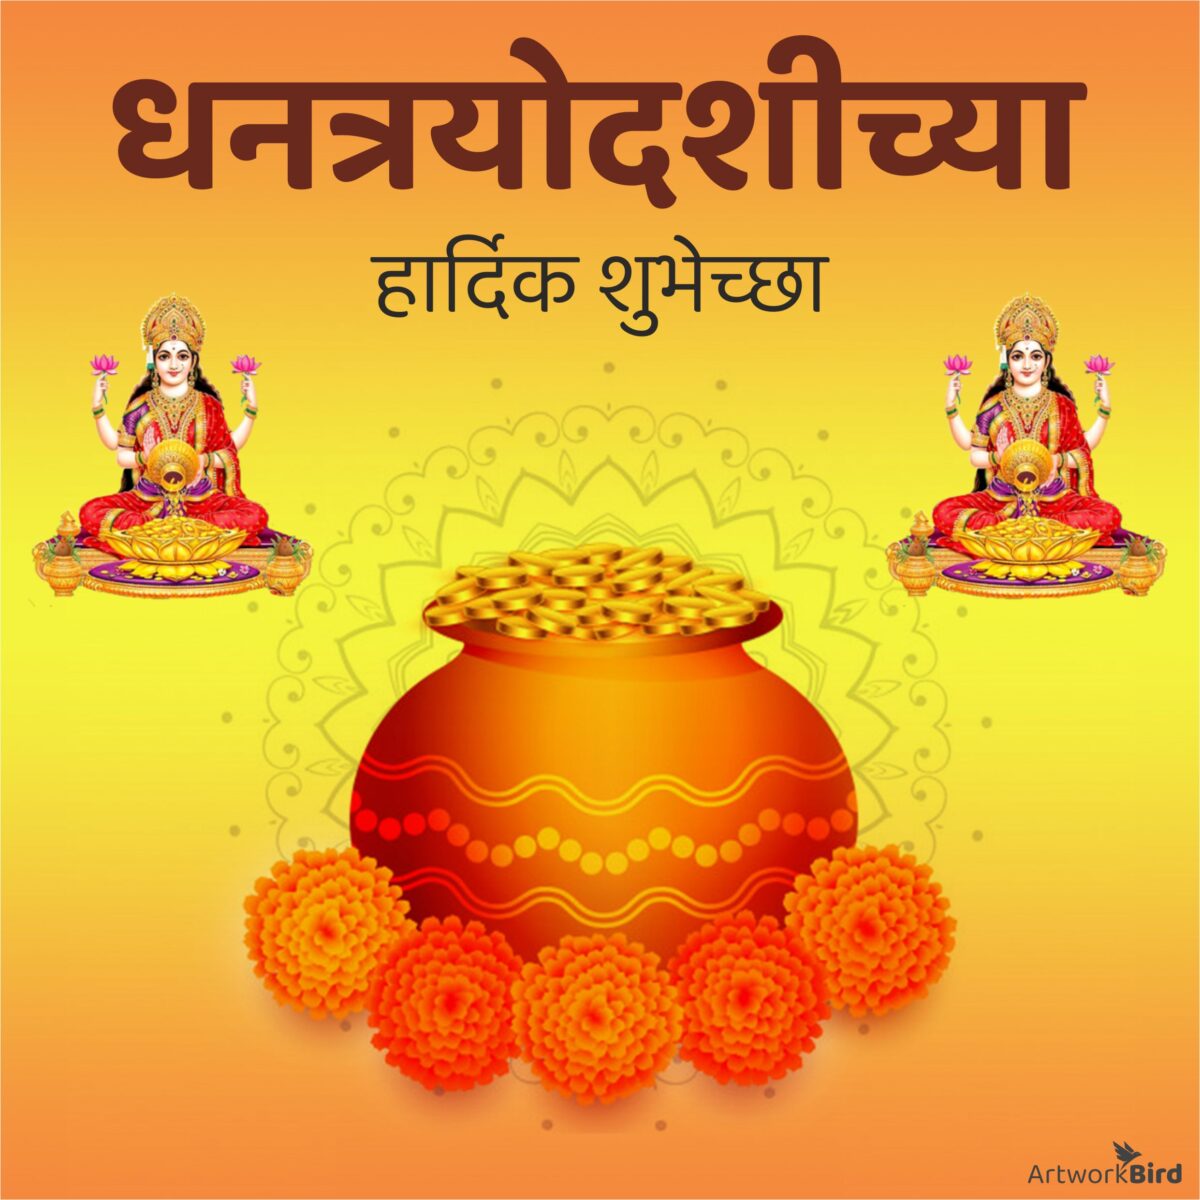 dhantrayodashi wishes in marathi